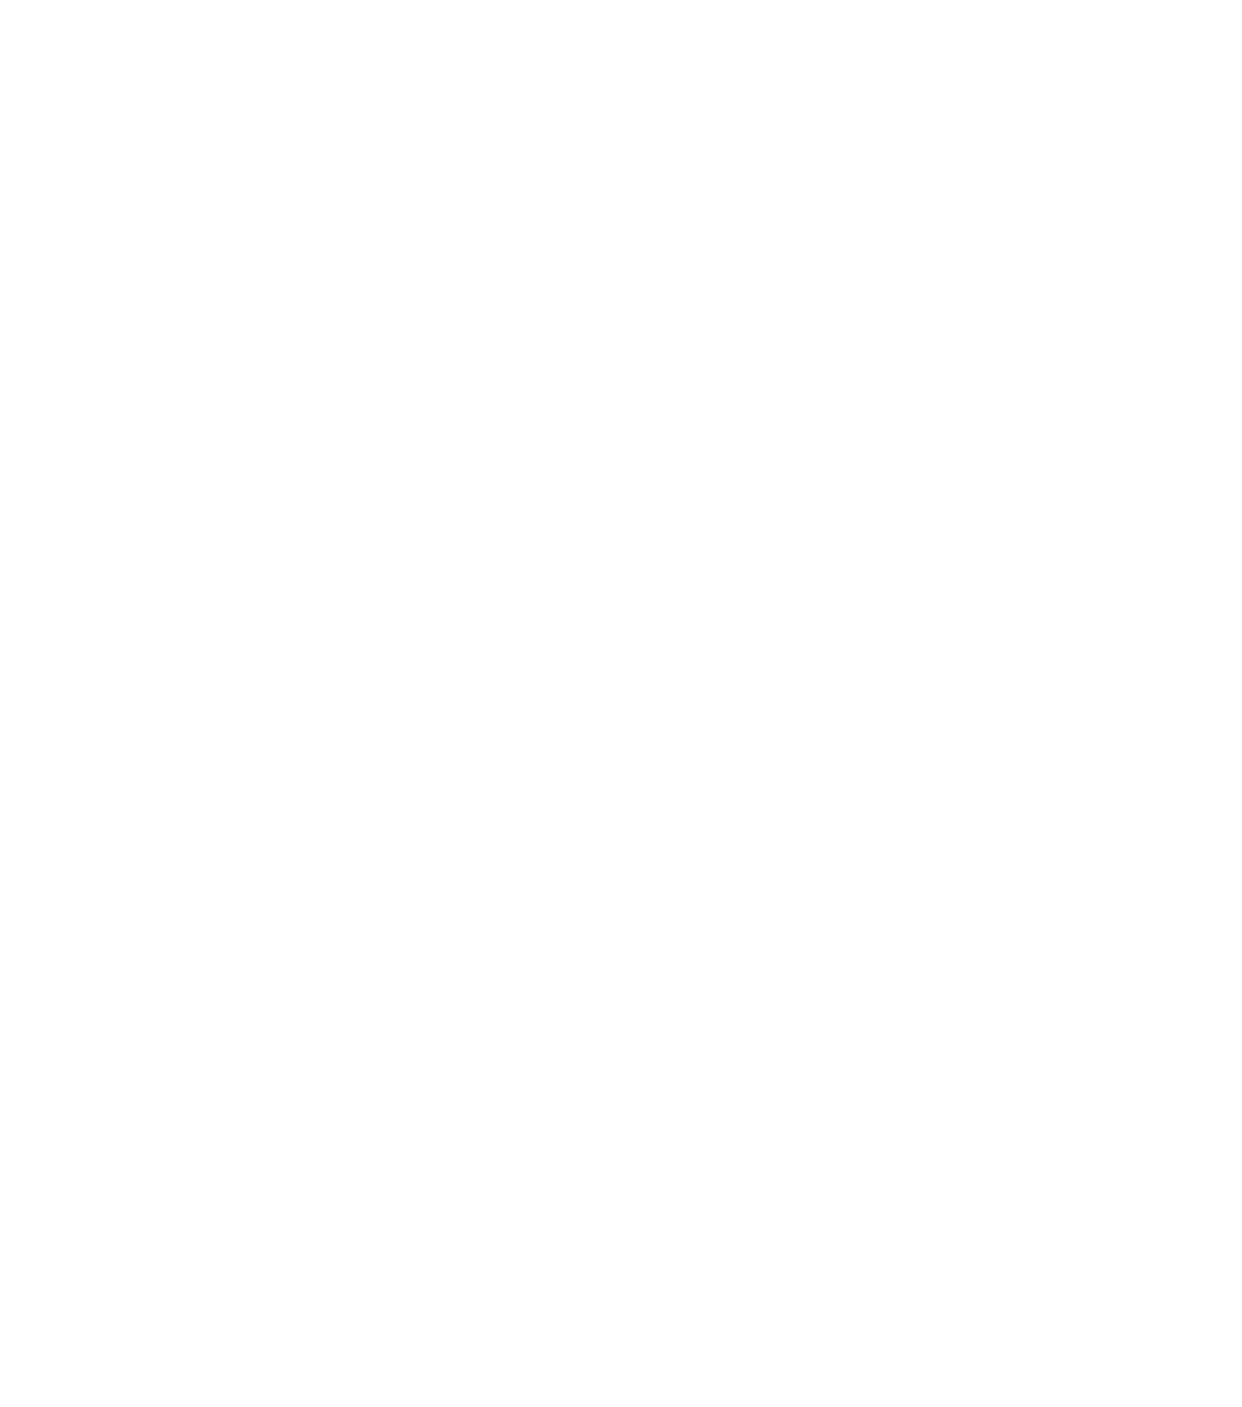 Homewood Environmental Commission